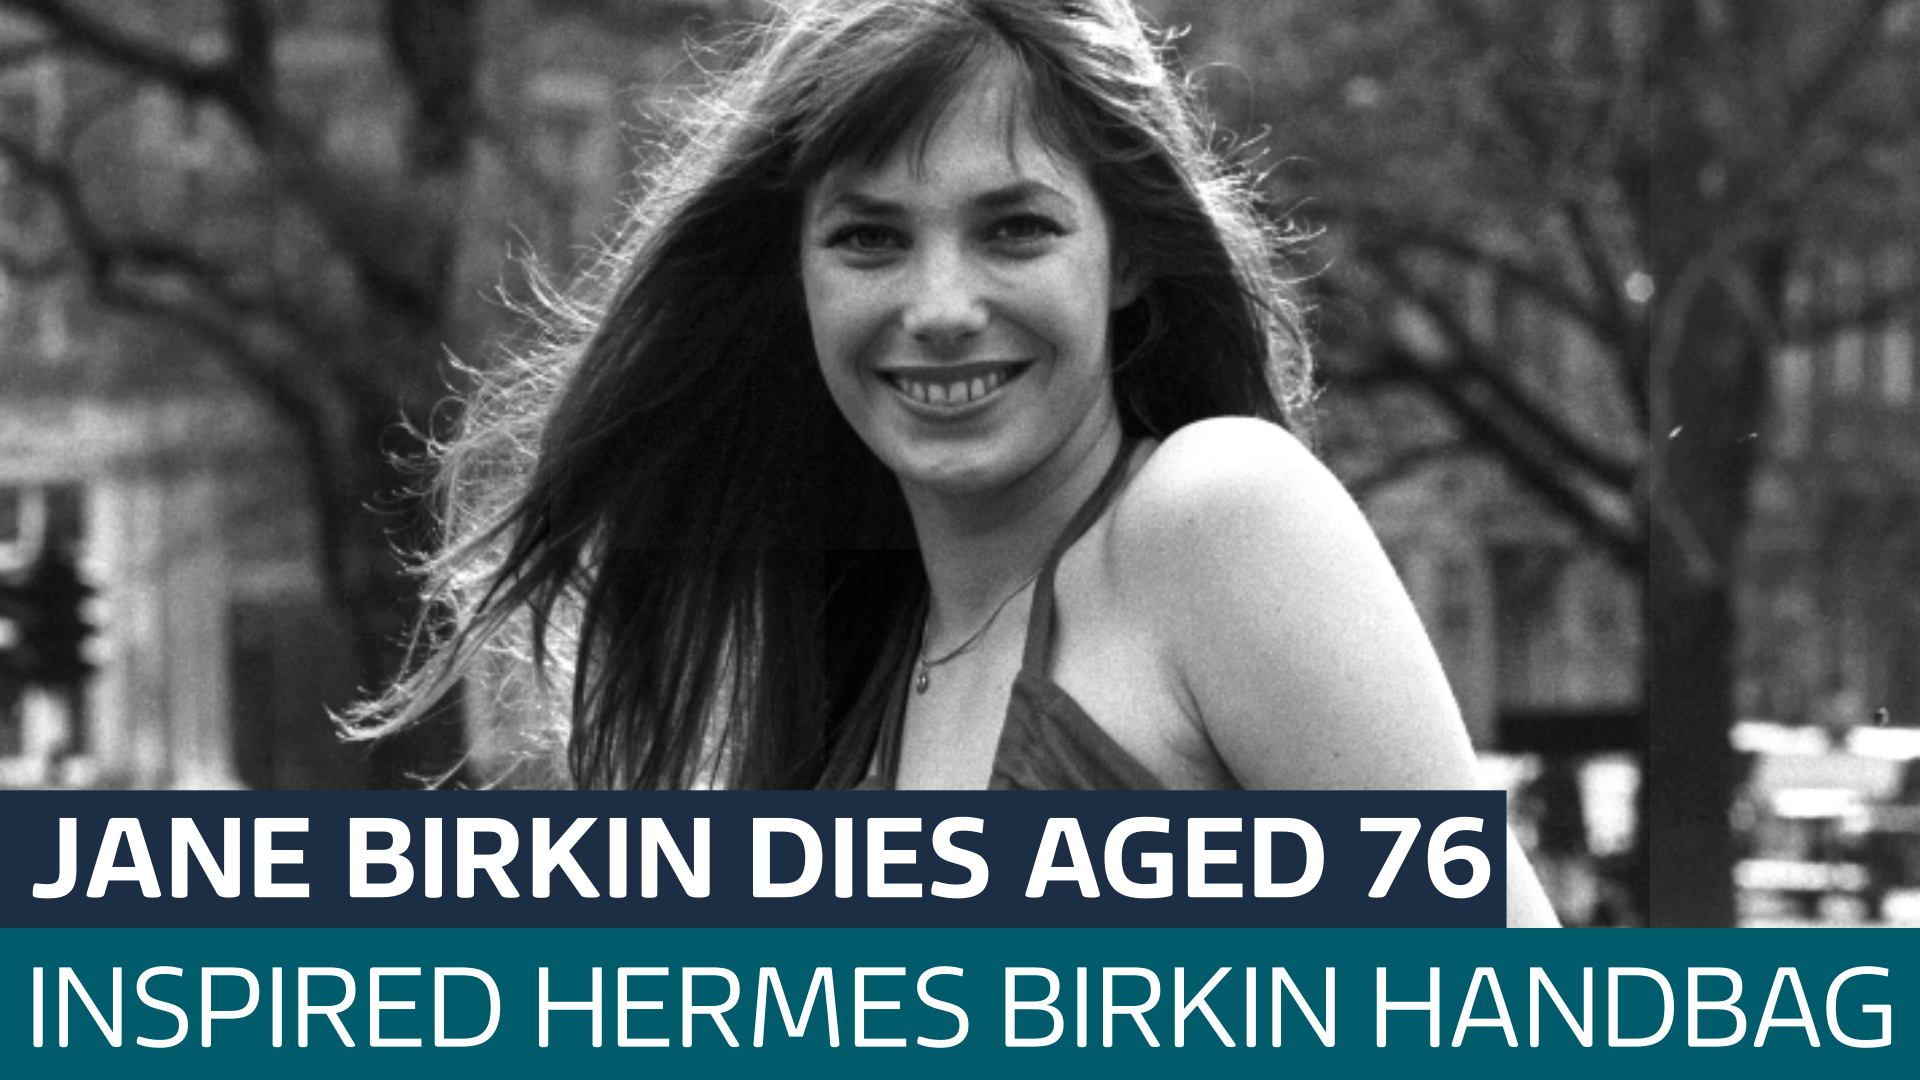 Singer, Actress, and Inspiration for Birkin Bags, Jane Birkin Dies at 76